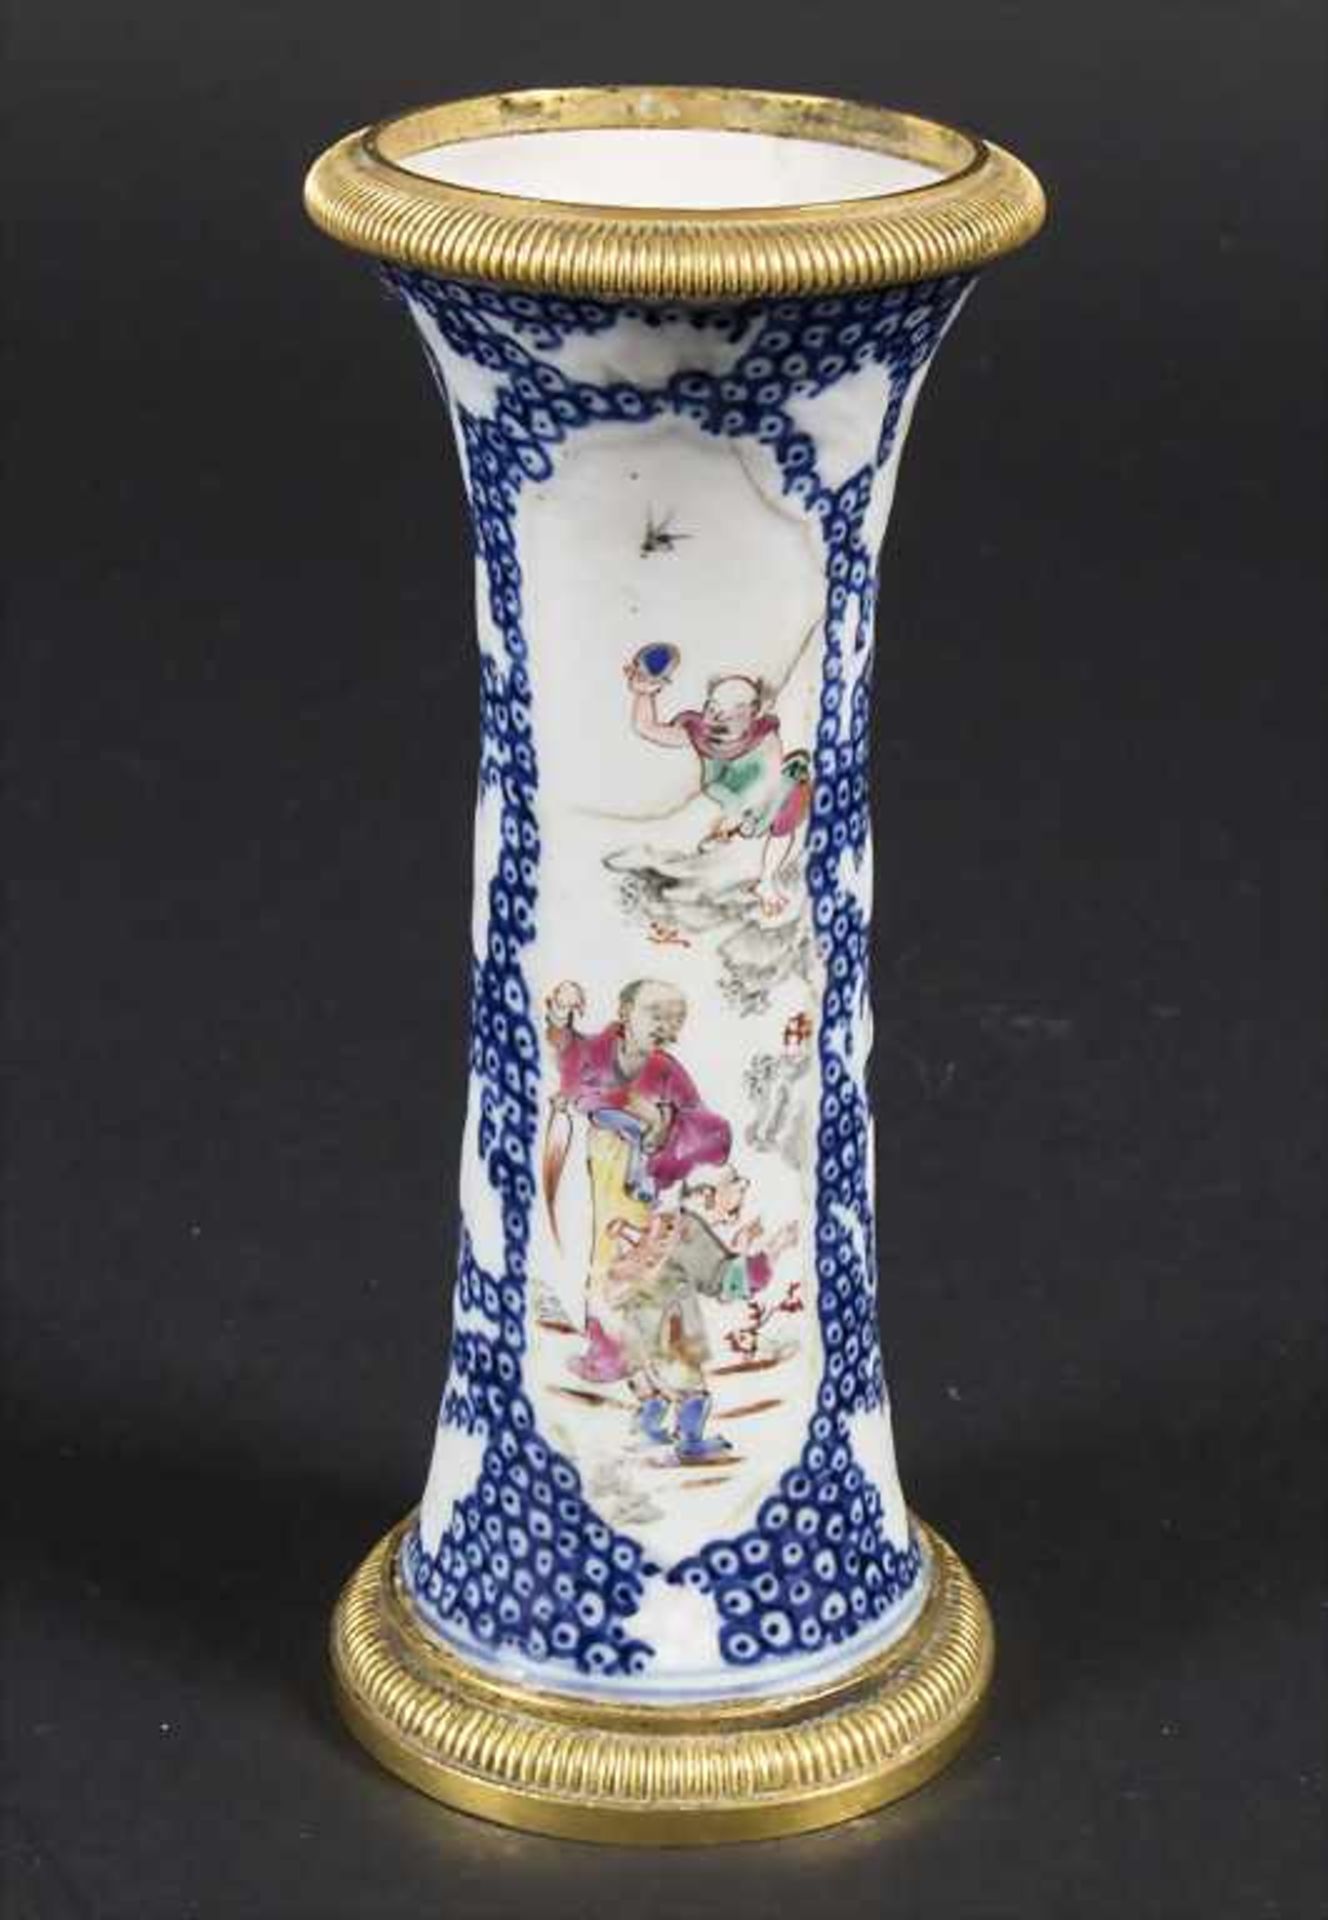 Ziervase / A decorative porcelain vase, China, Qing Dynastie (1644-1911), 18. Jh. - Image 3 of 9